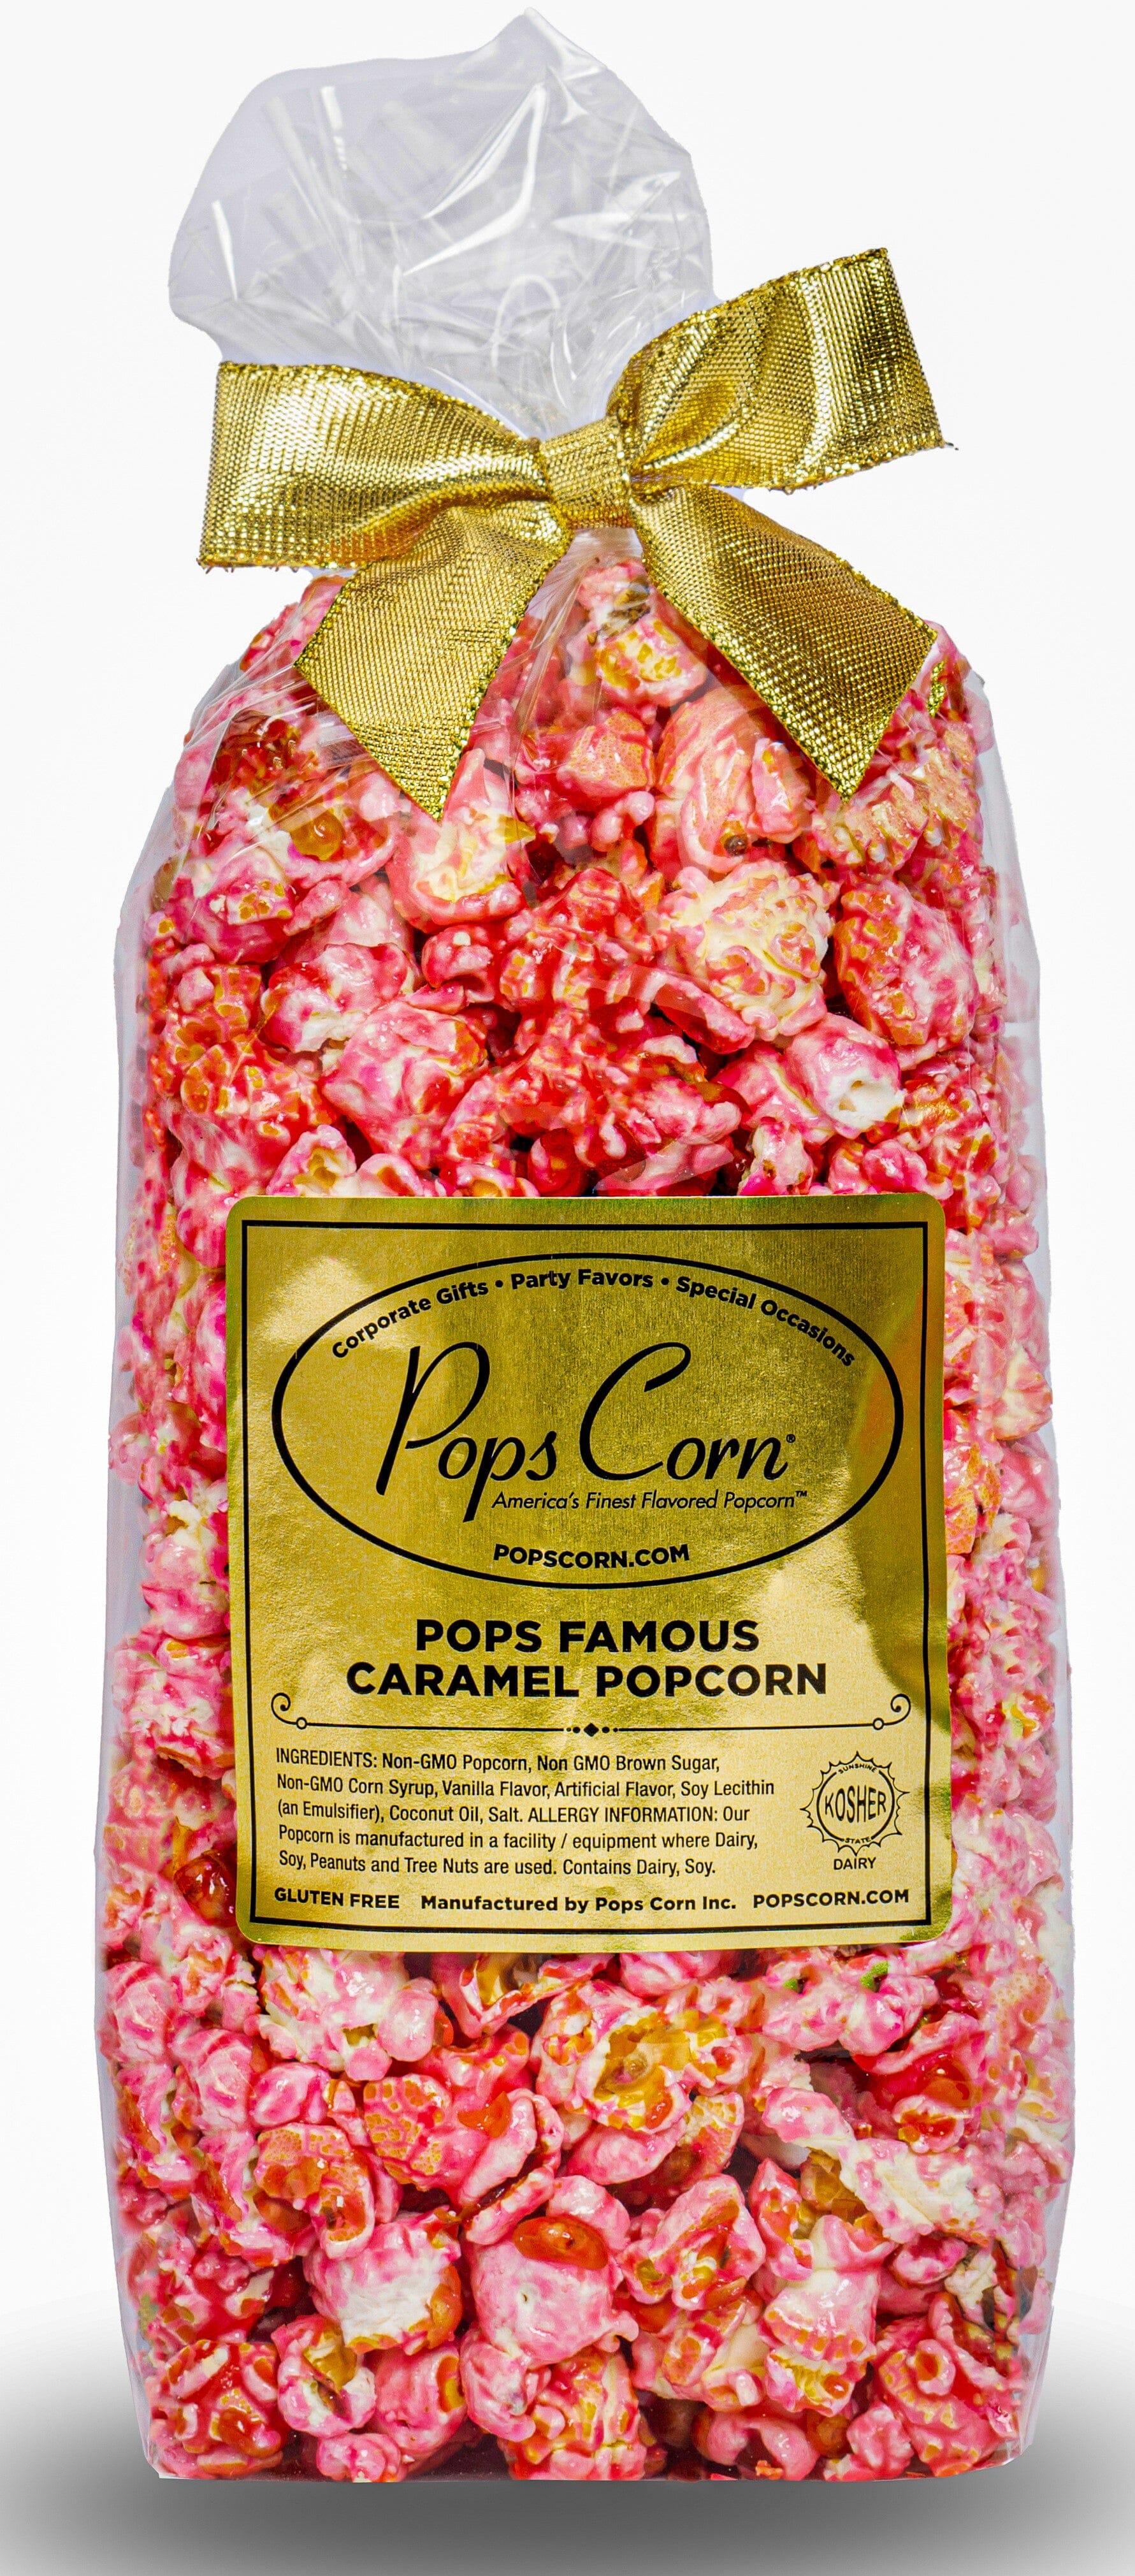 Pop corn salé Carrefour 2x100G Contenu